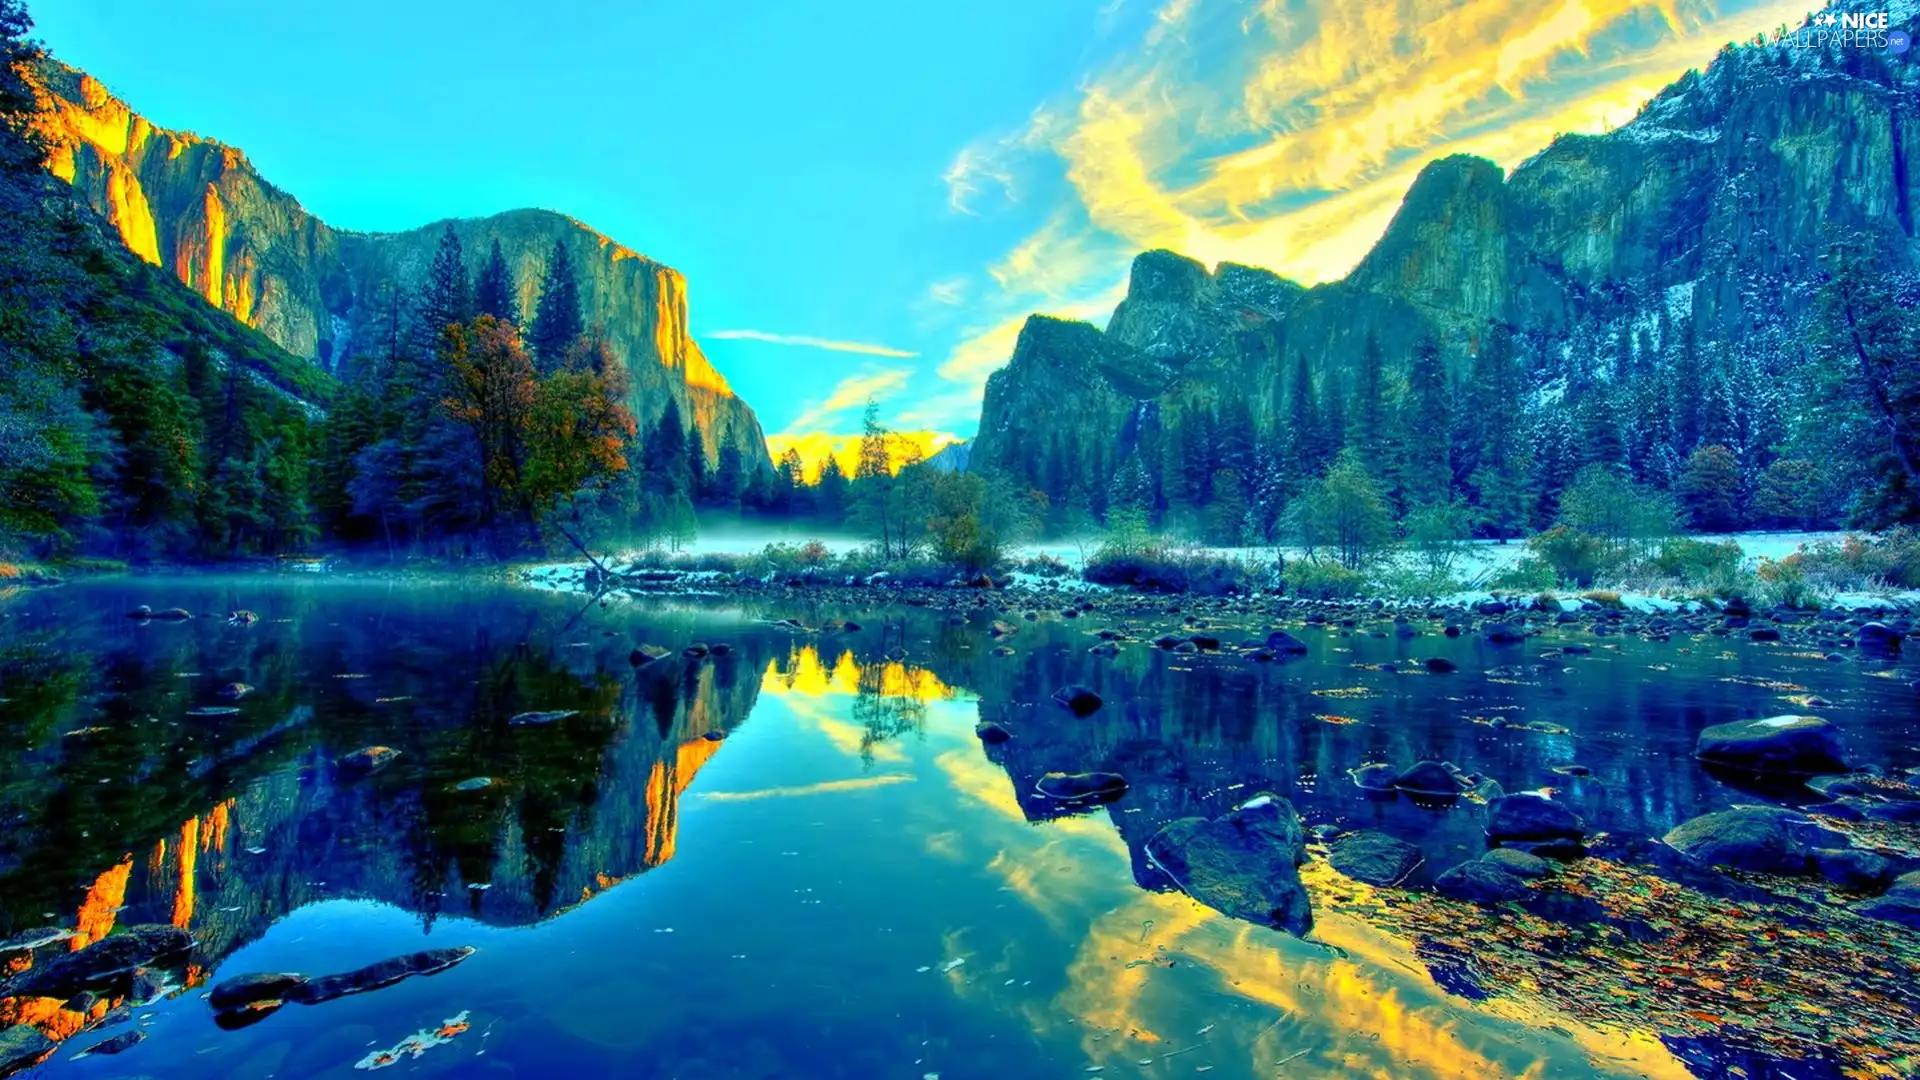 Mountains, lake, reflection, rocks